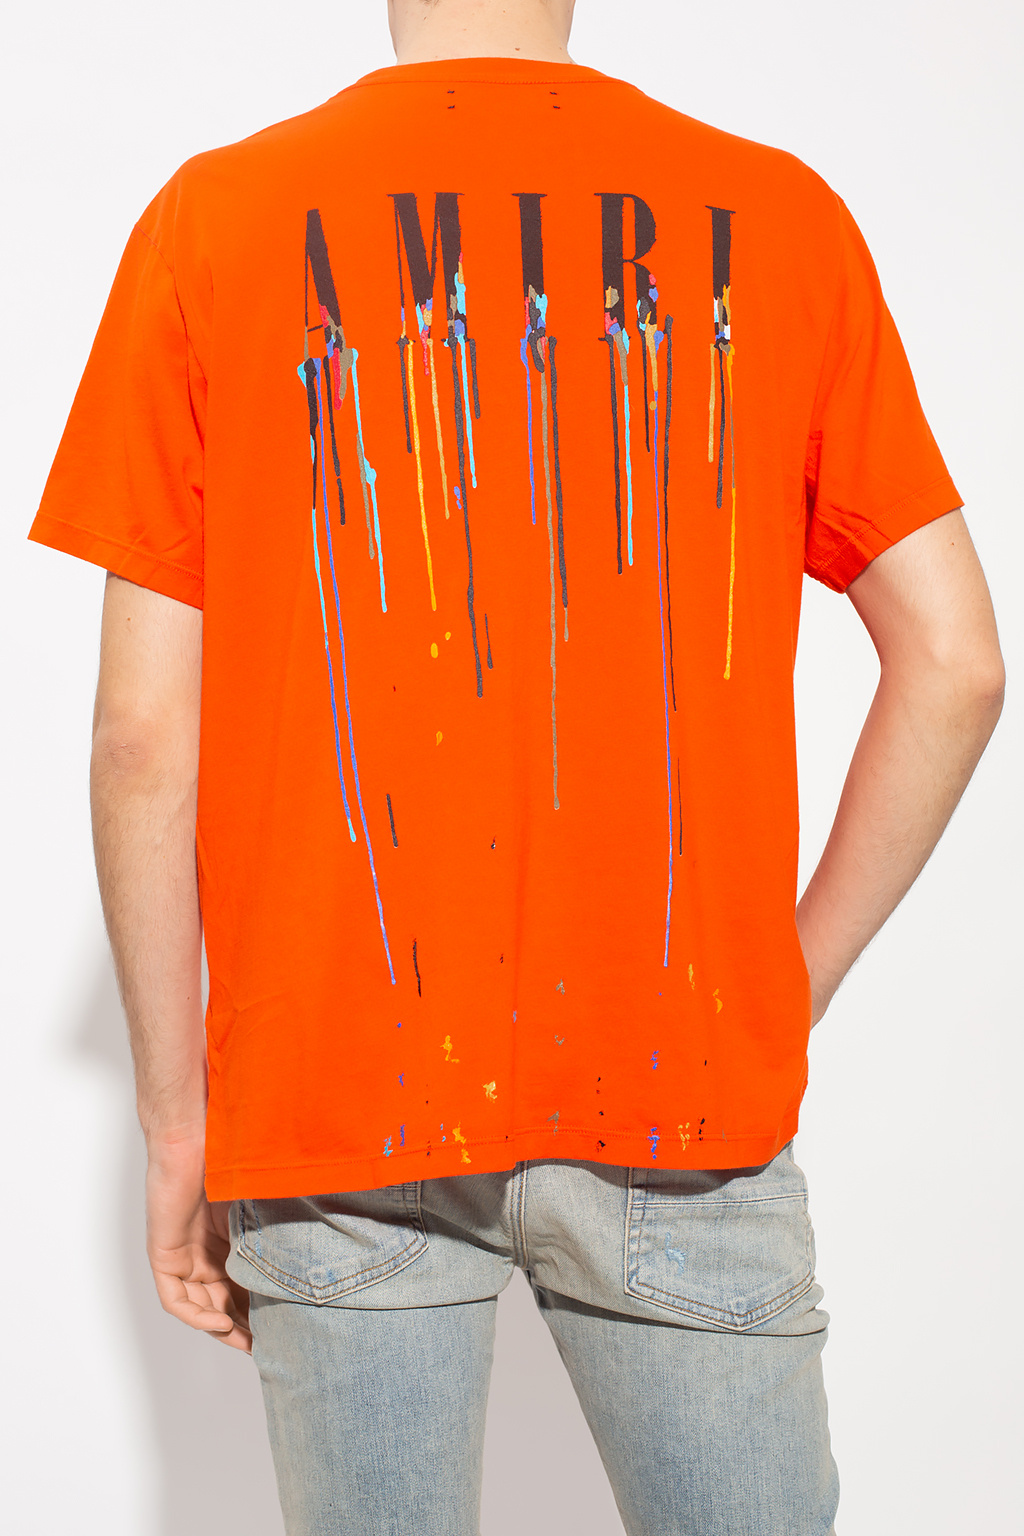 Amiri T-shirt with logo | Men's Clothing | Vitkac